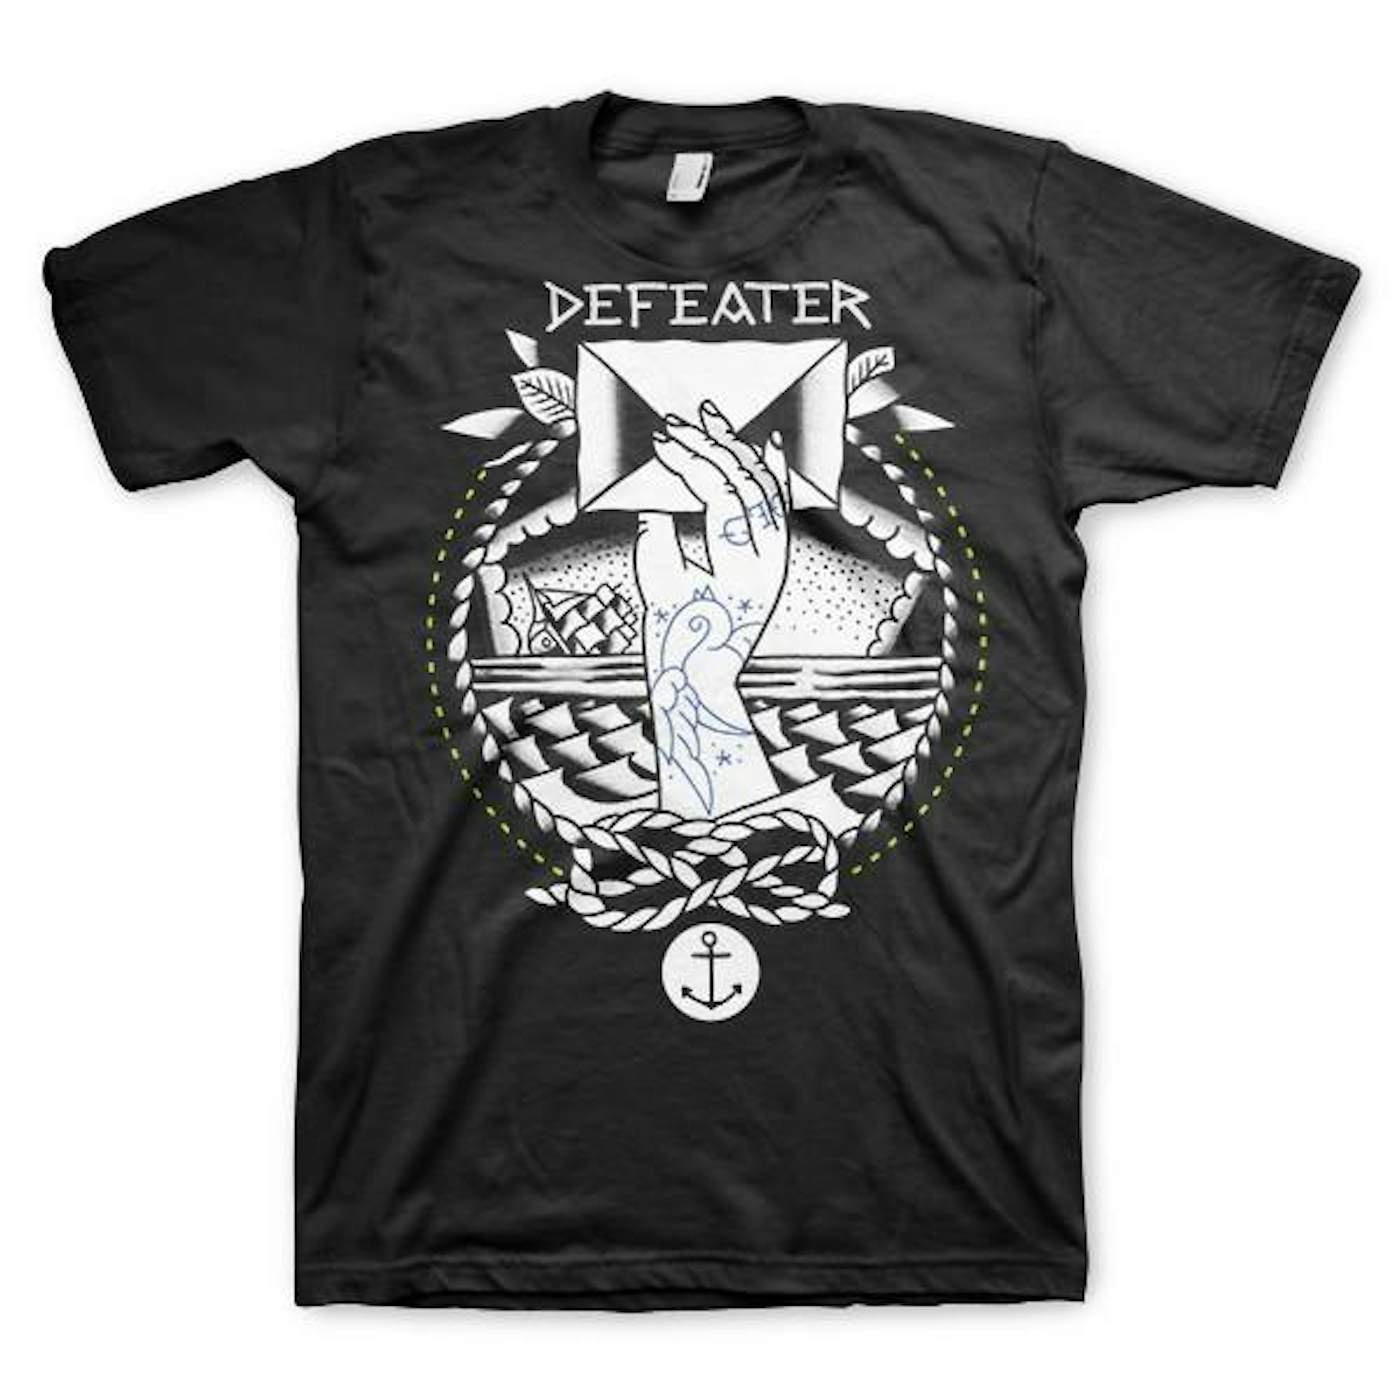 Defeater Drowning T-shirt